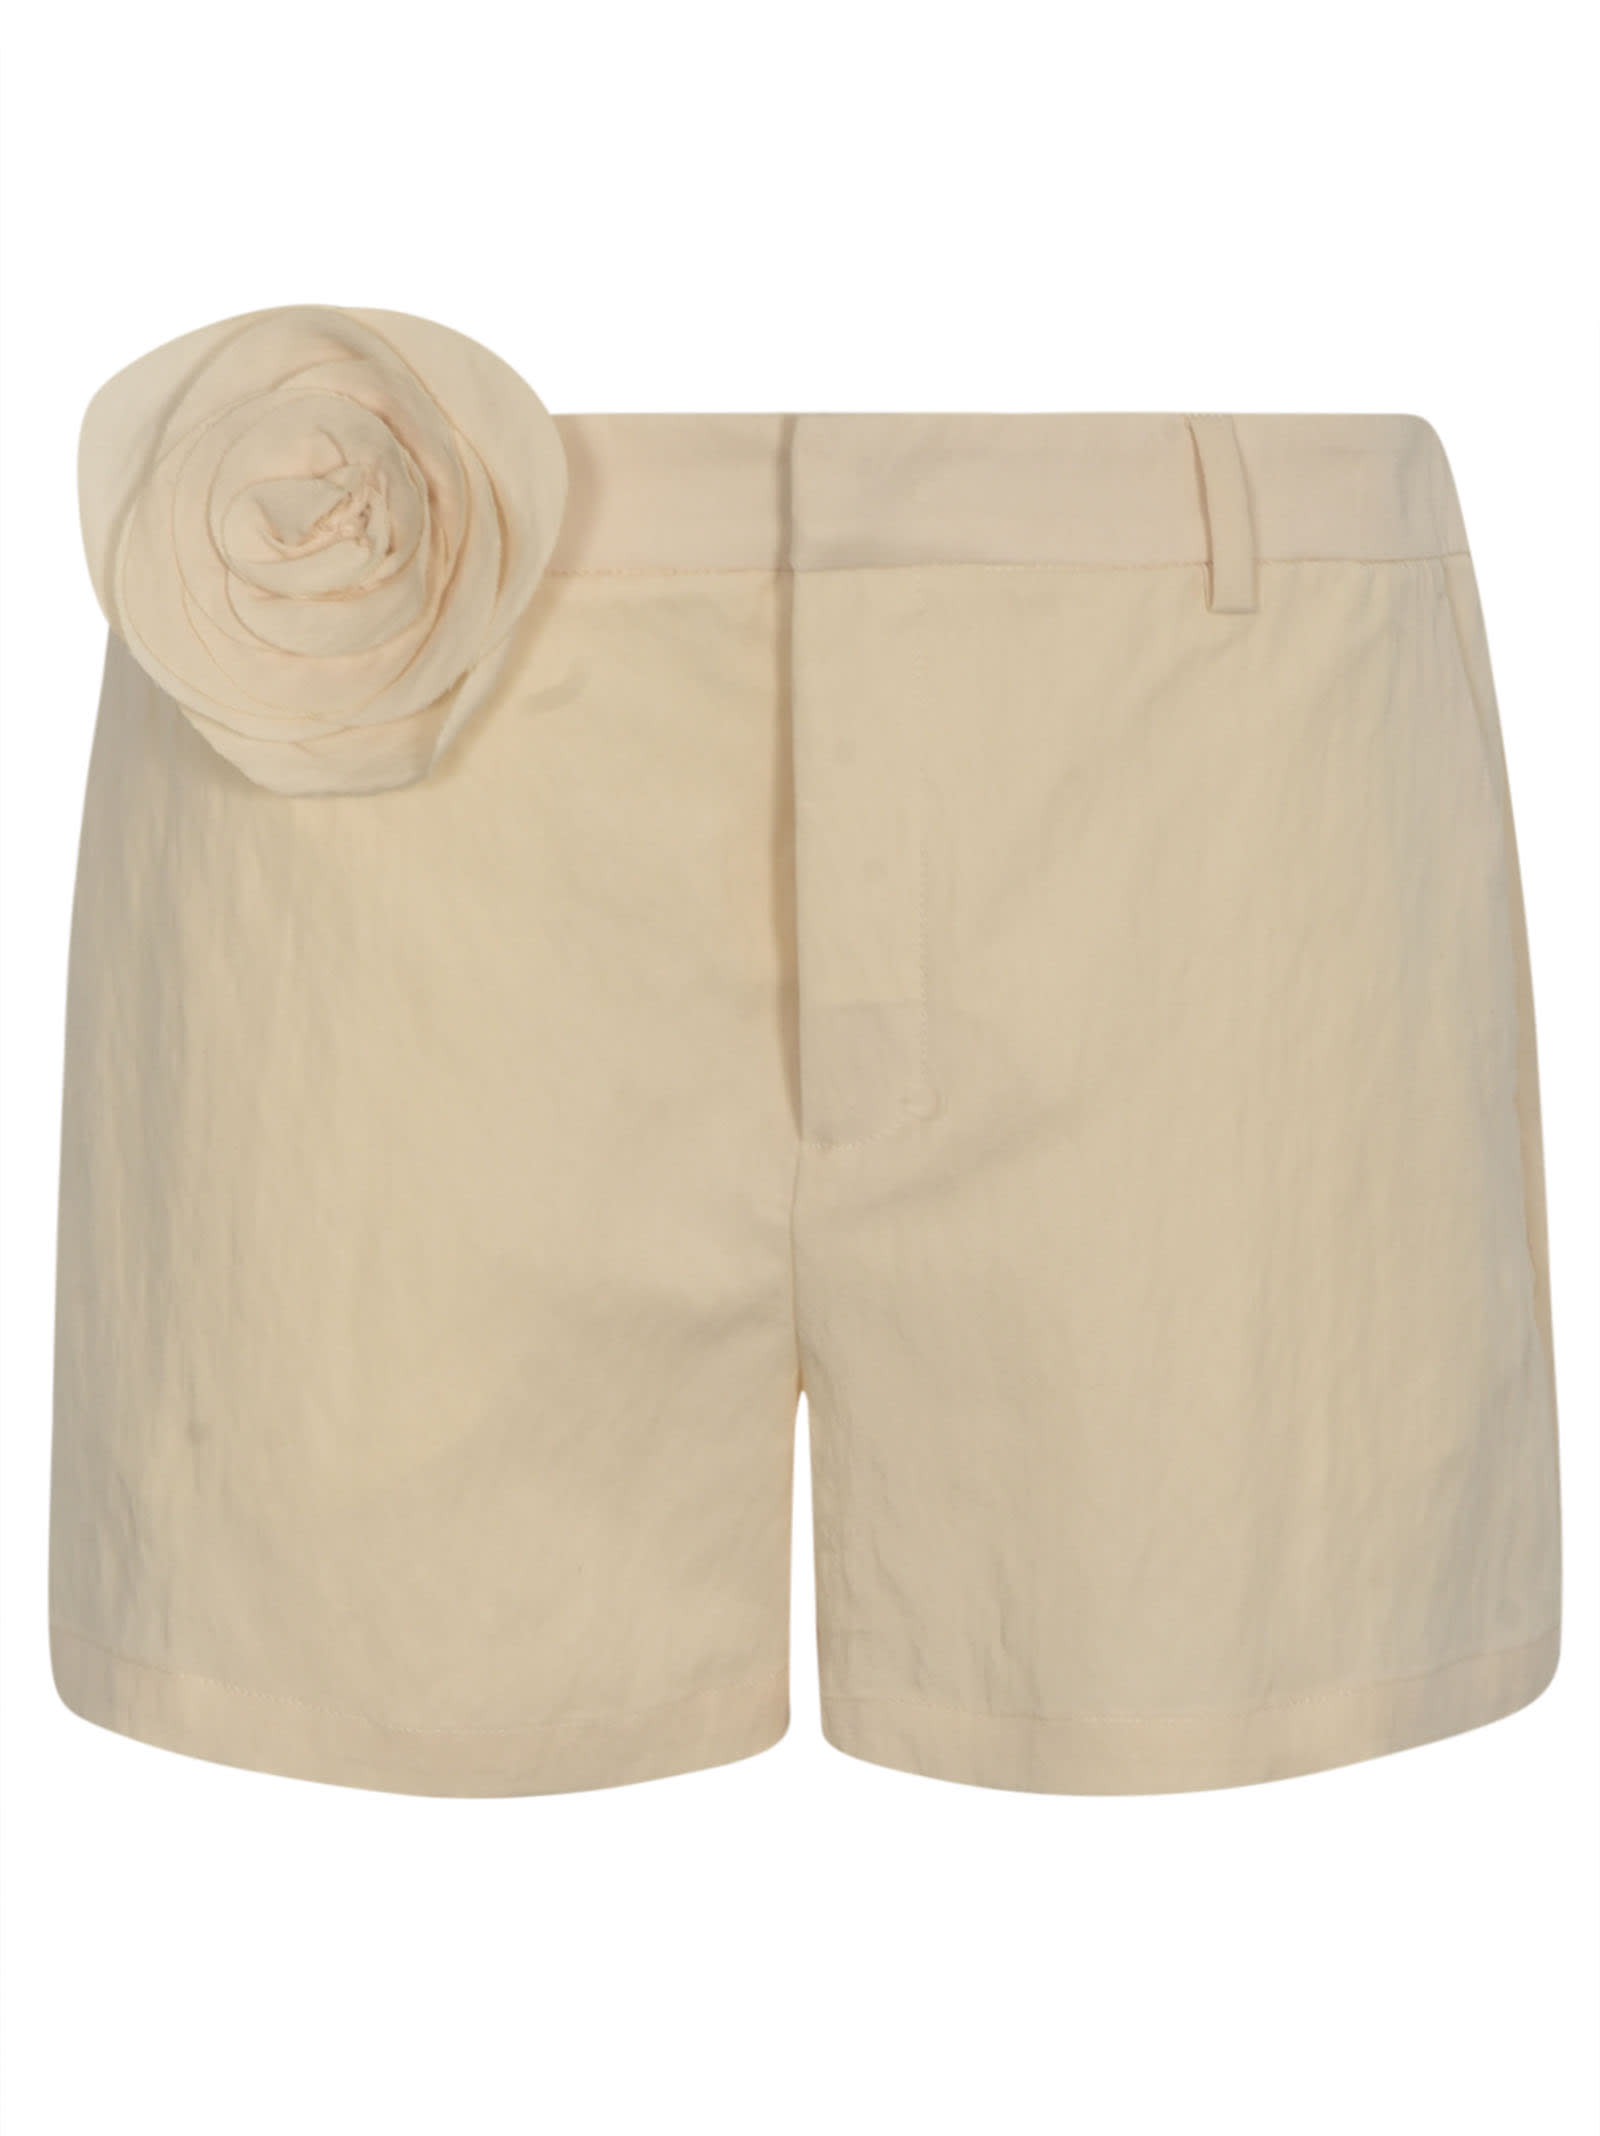 Flower Concealed Shorts